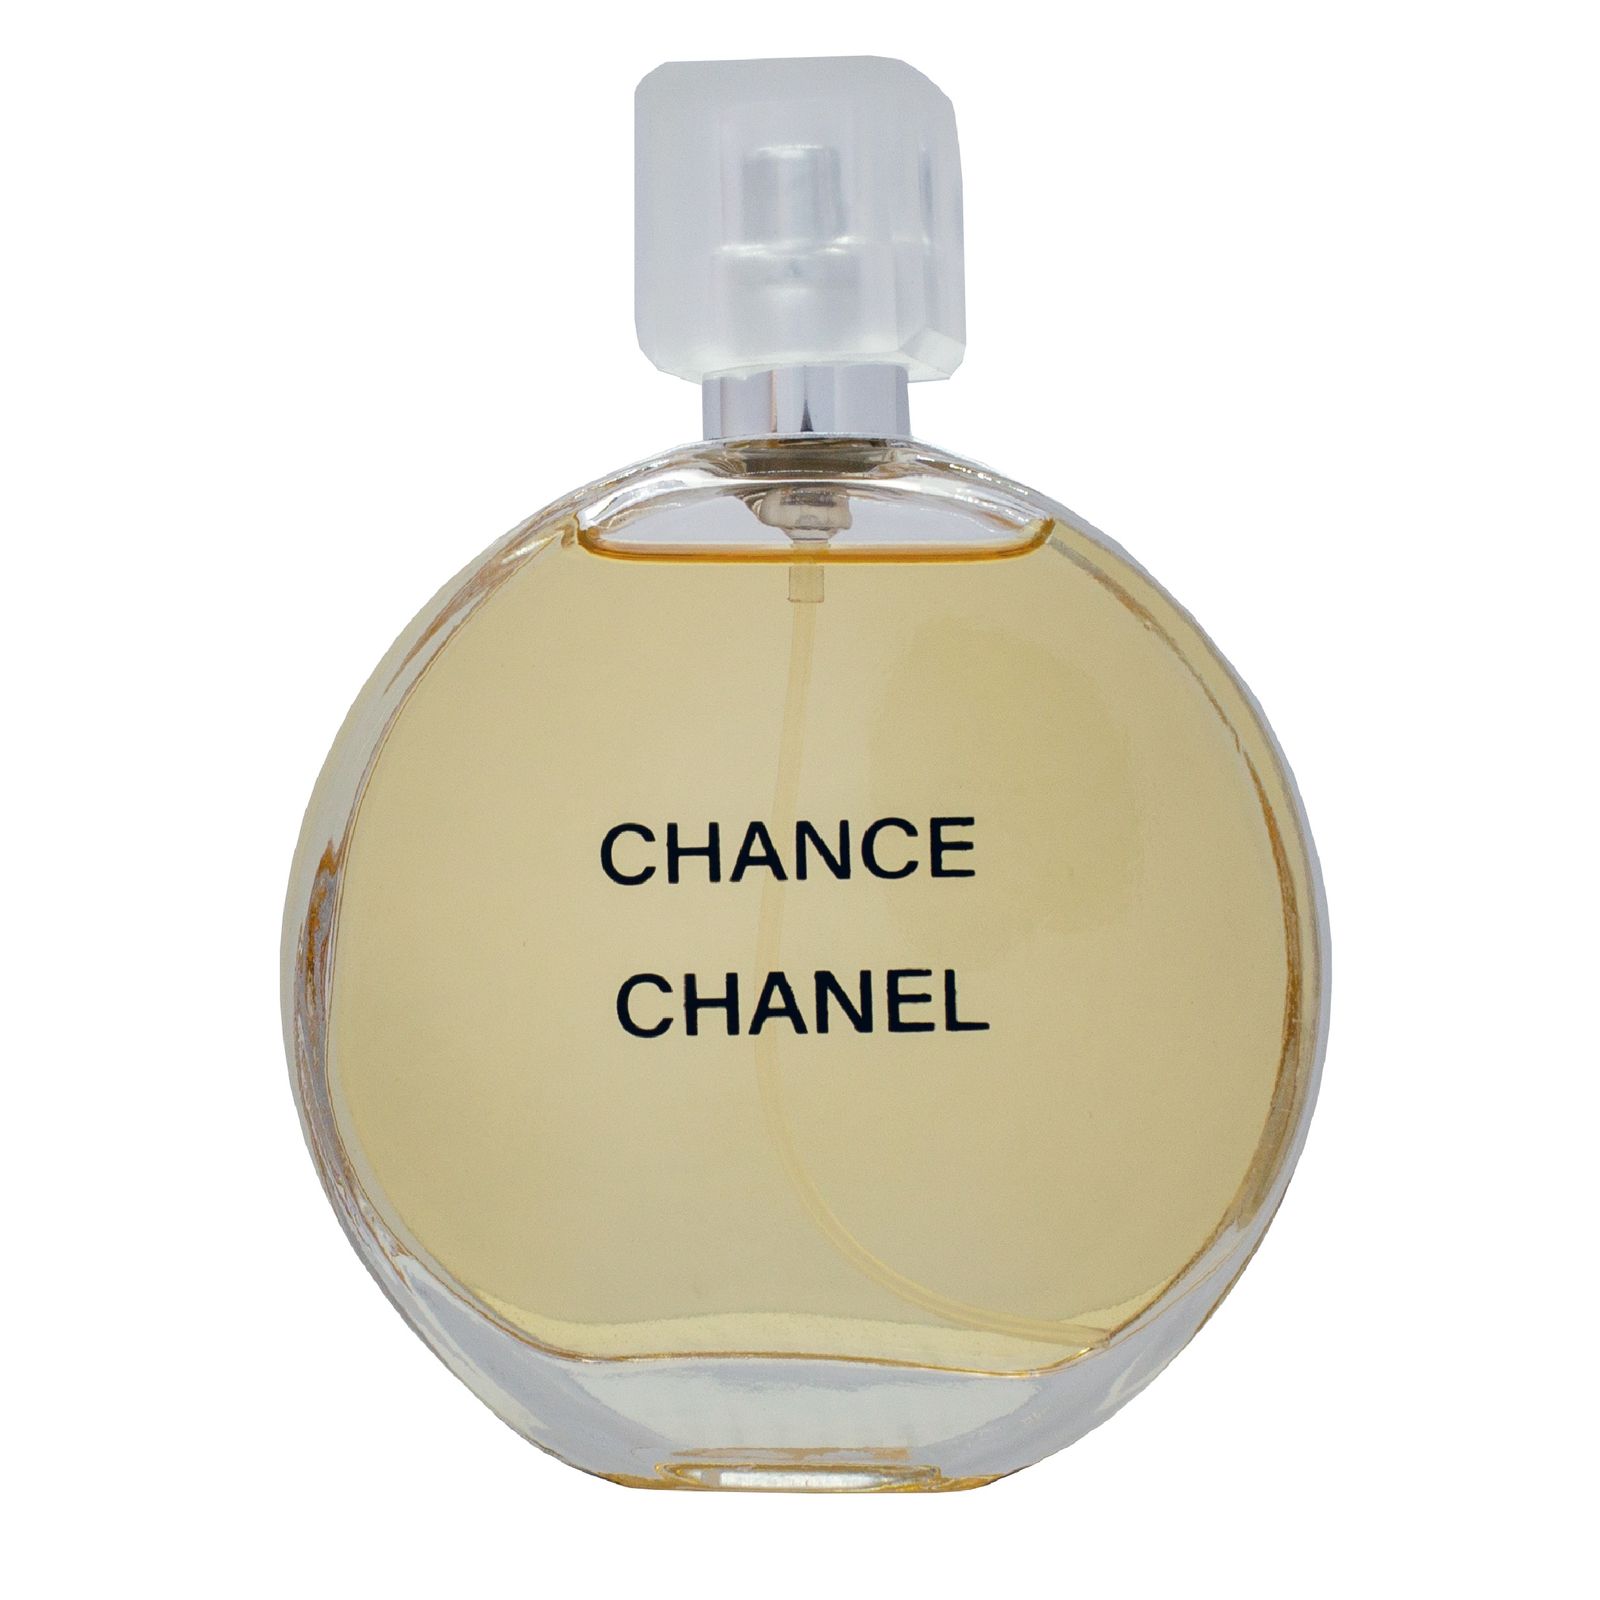 ادو پرفیوم زنانه اسکلاره مدل Chance Chanel حجم 100 میلی لیتر -  - 1